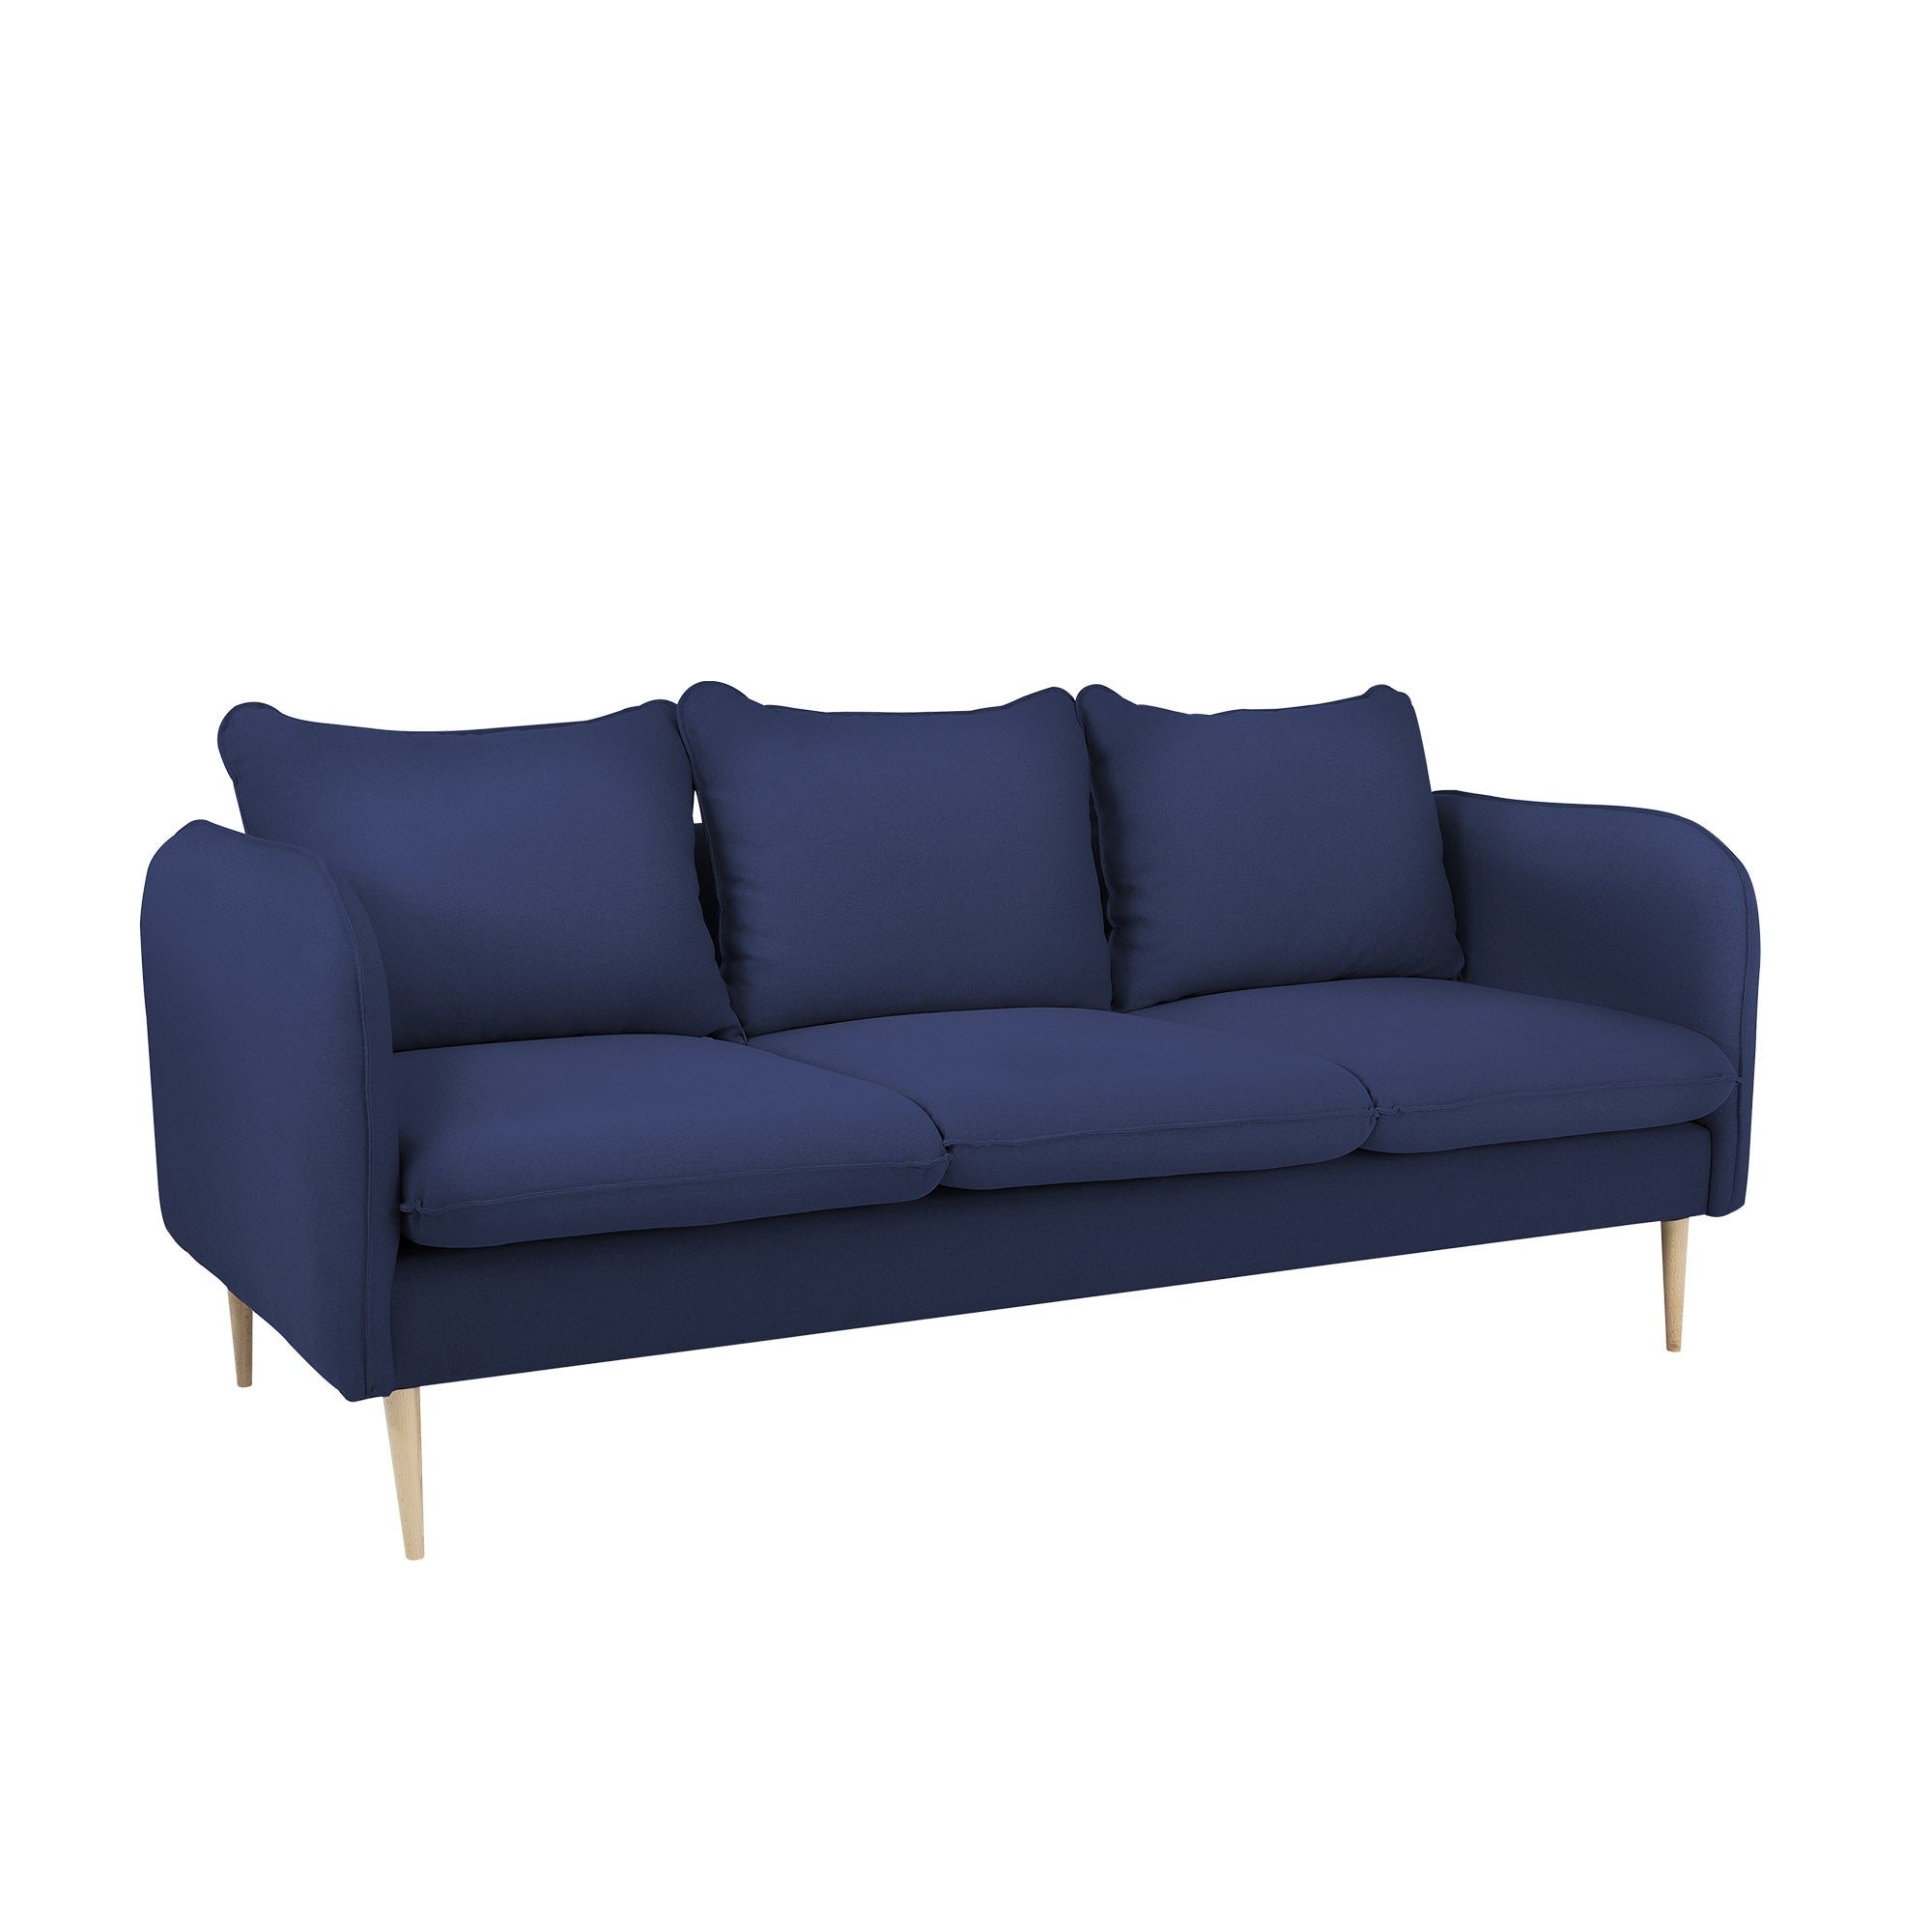 POSH WOOD Sofa 3 Seaters upholstery colour blue